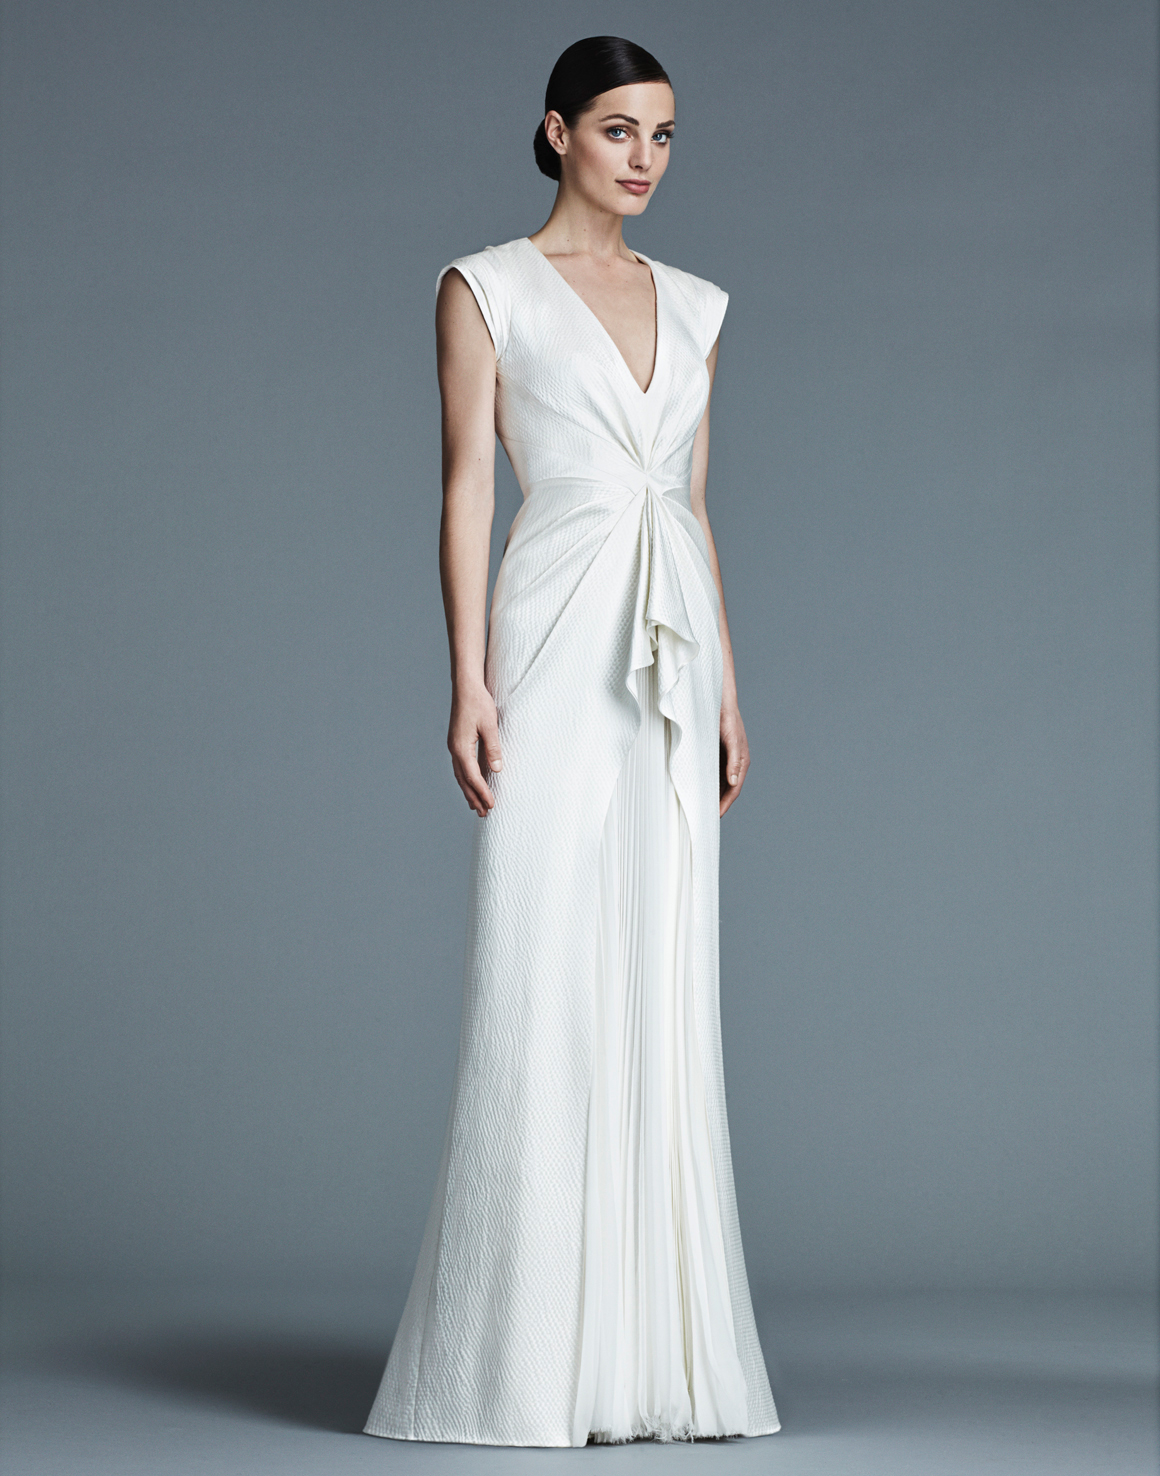  J. Mendel 2016 bridal collection | available at Little White Dress | Denver, Colorado 